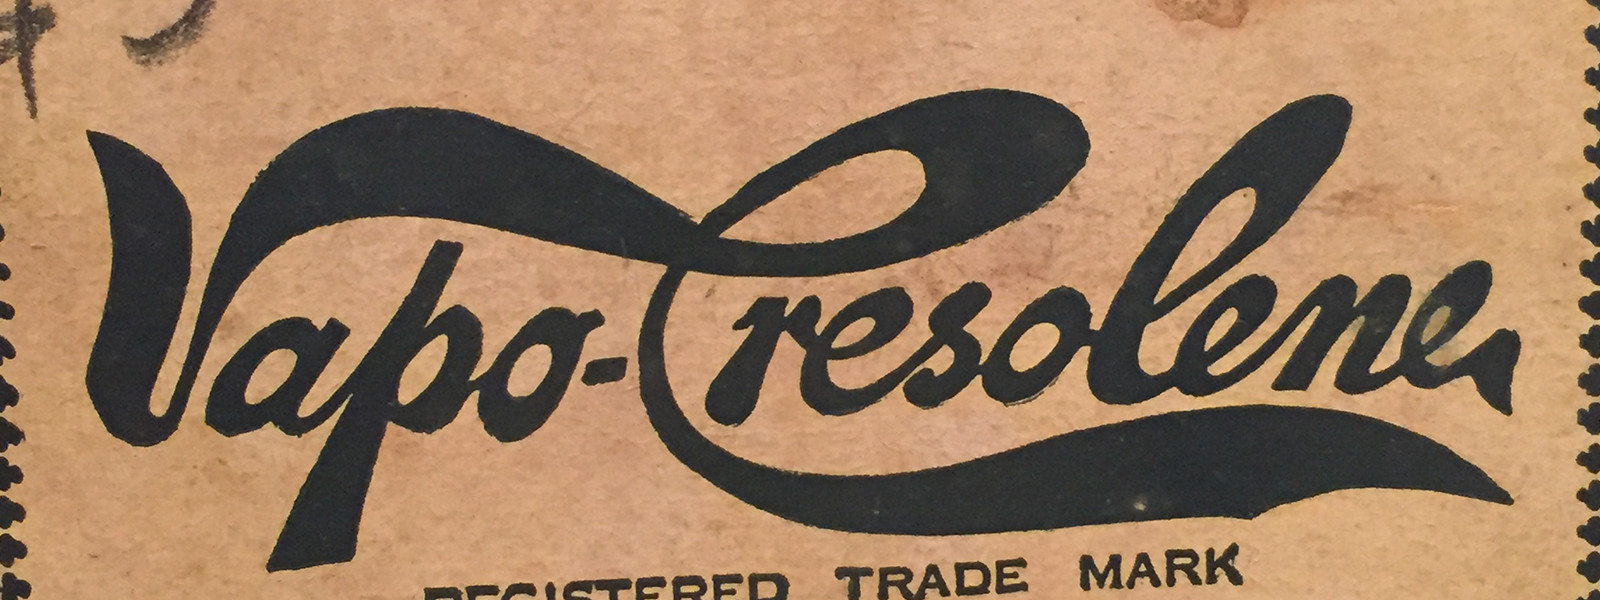 Old medicine label - found type - script lettering